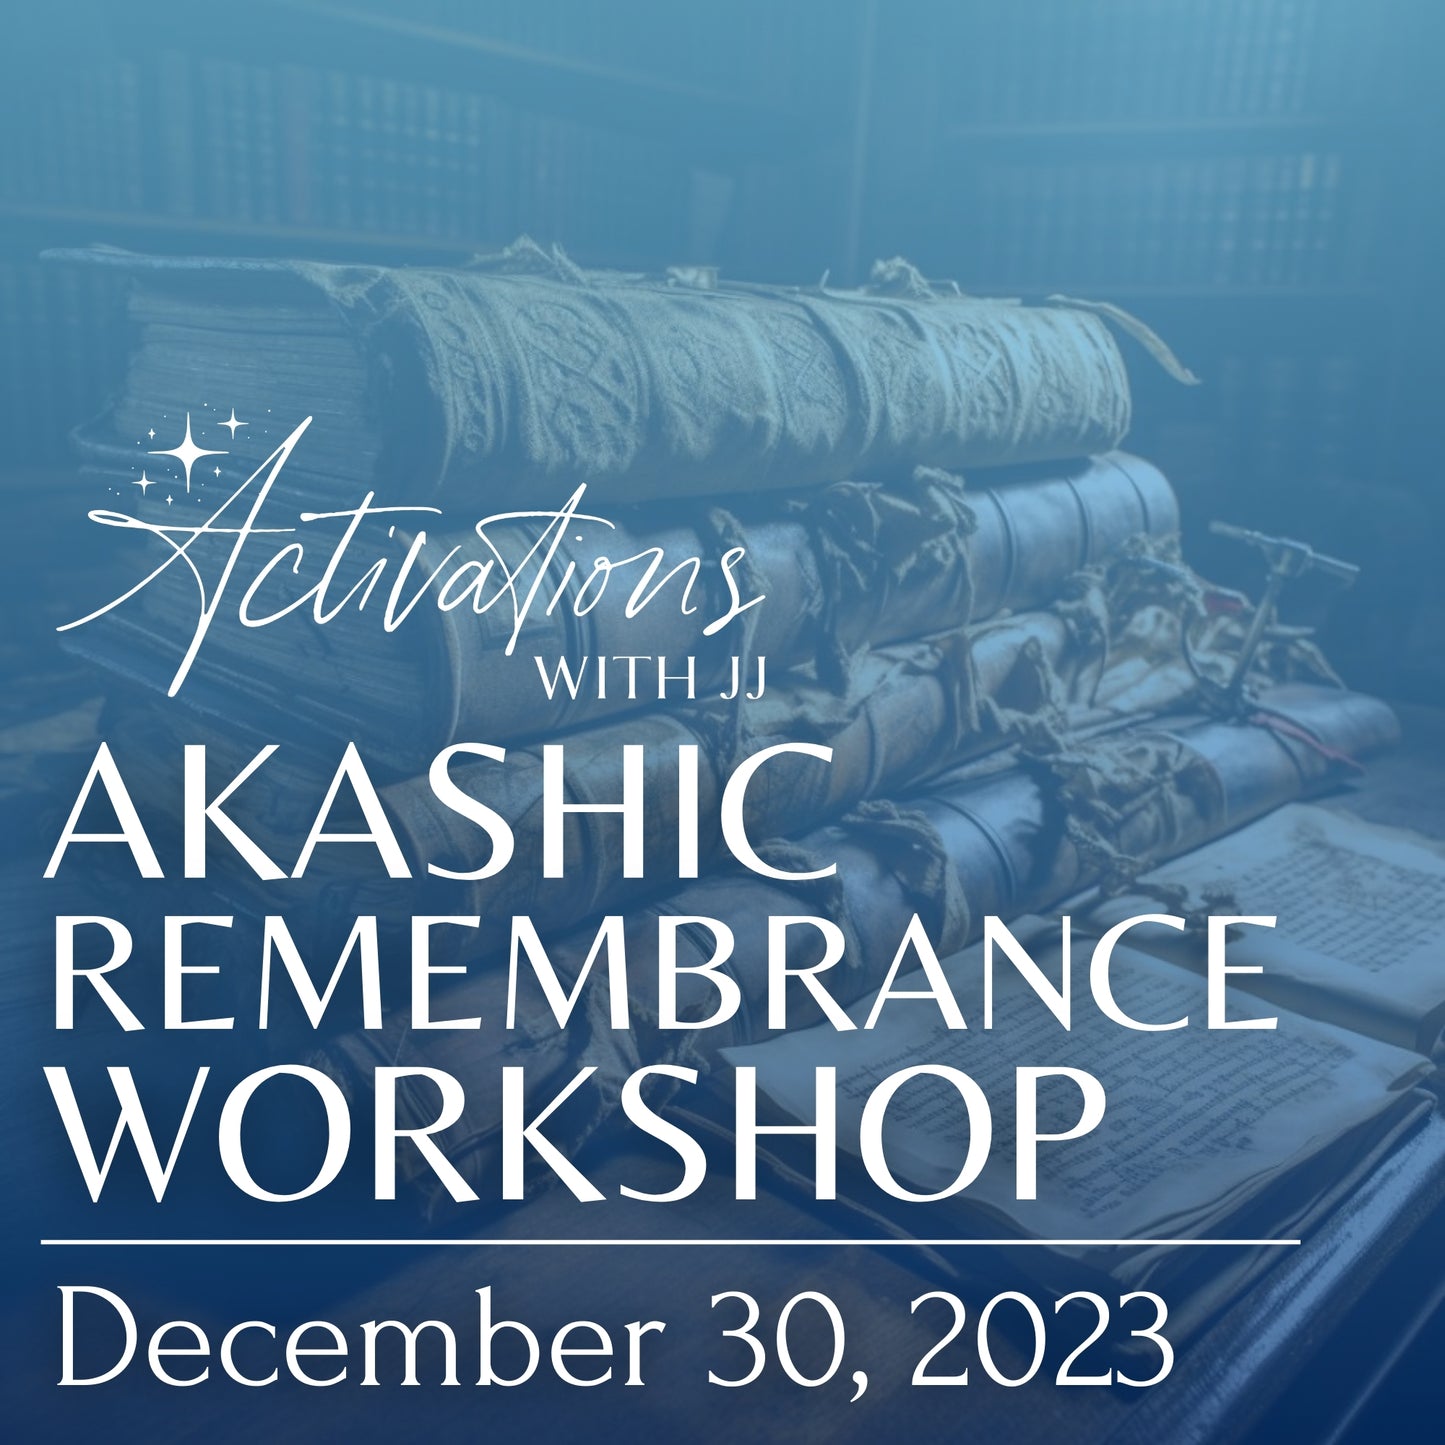 Akashic Remembrance Workshop (MP3 Recording) | December 30, 2023